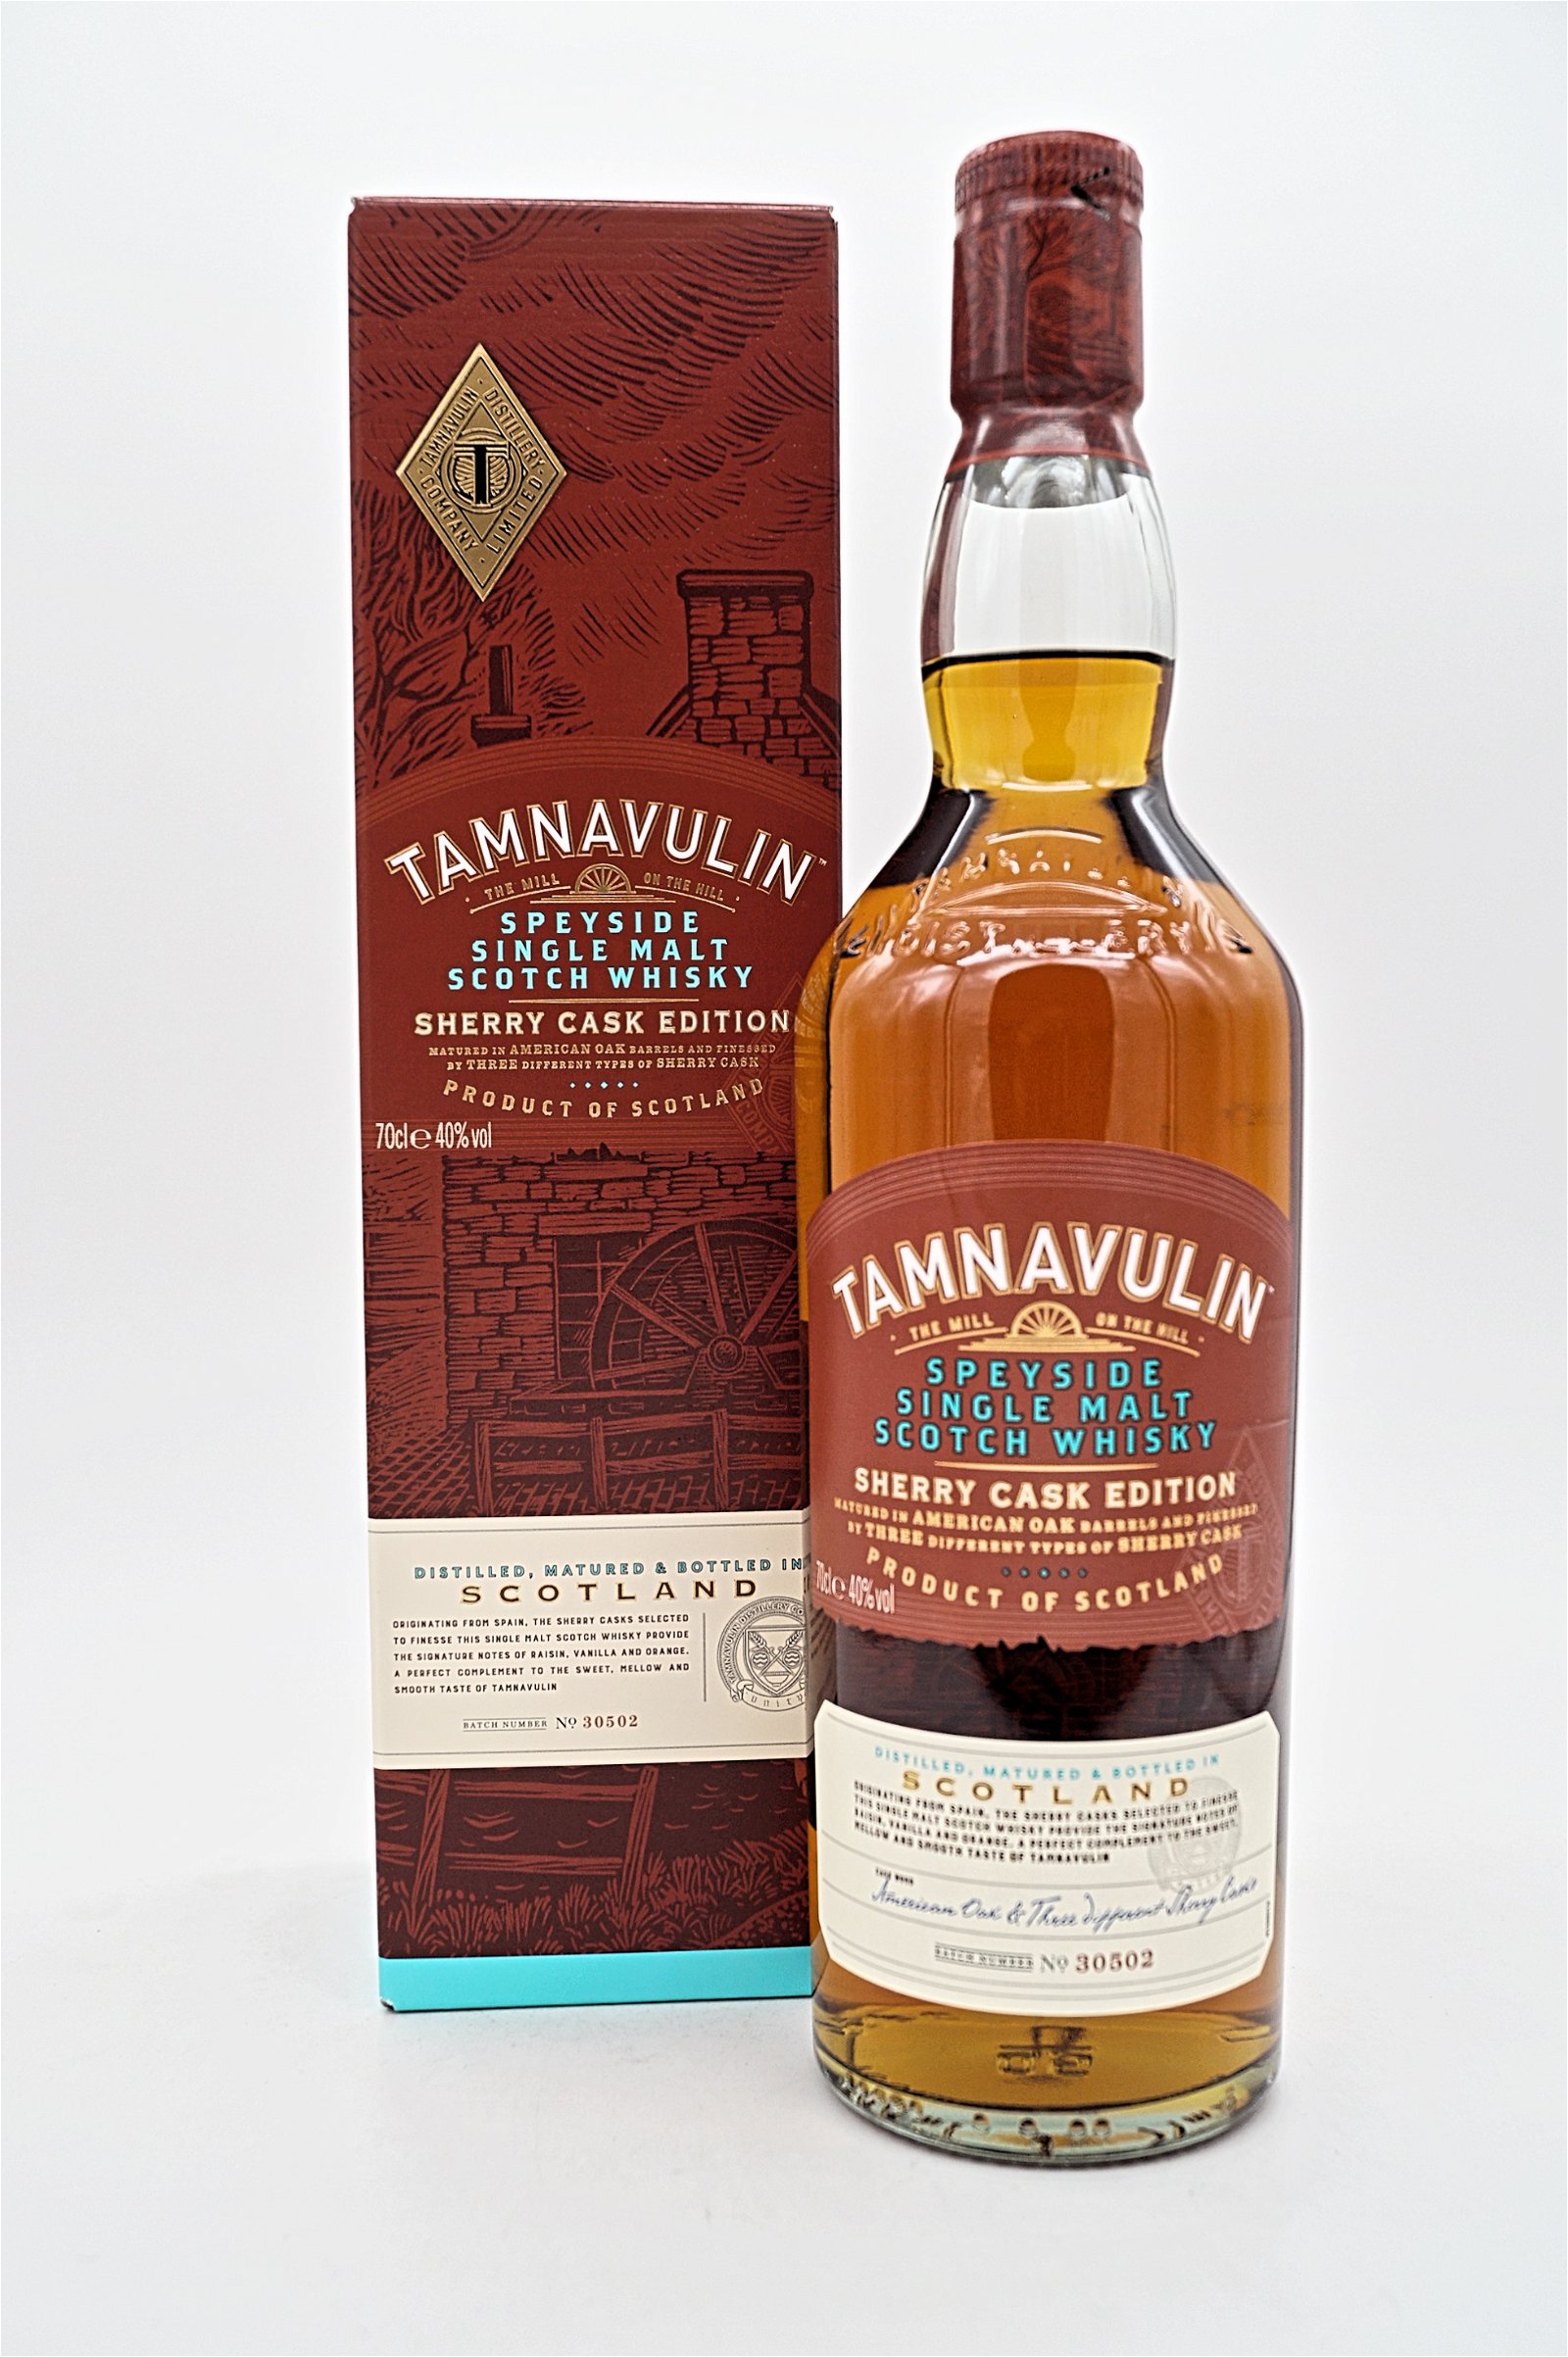 Tamnavulin Sherry Cask Editiom Speyside Single Malt Scotch Whisky